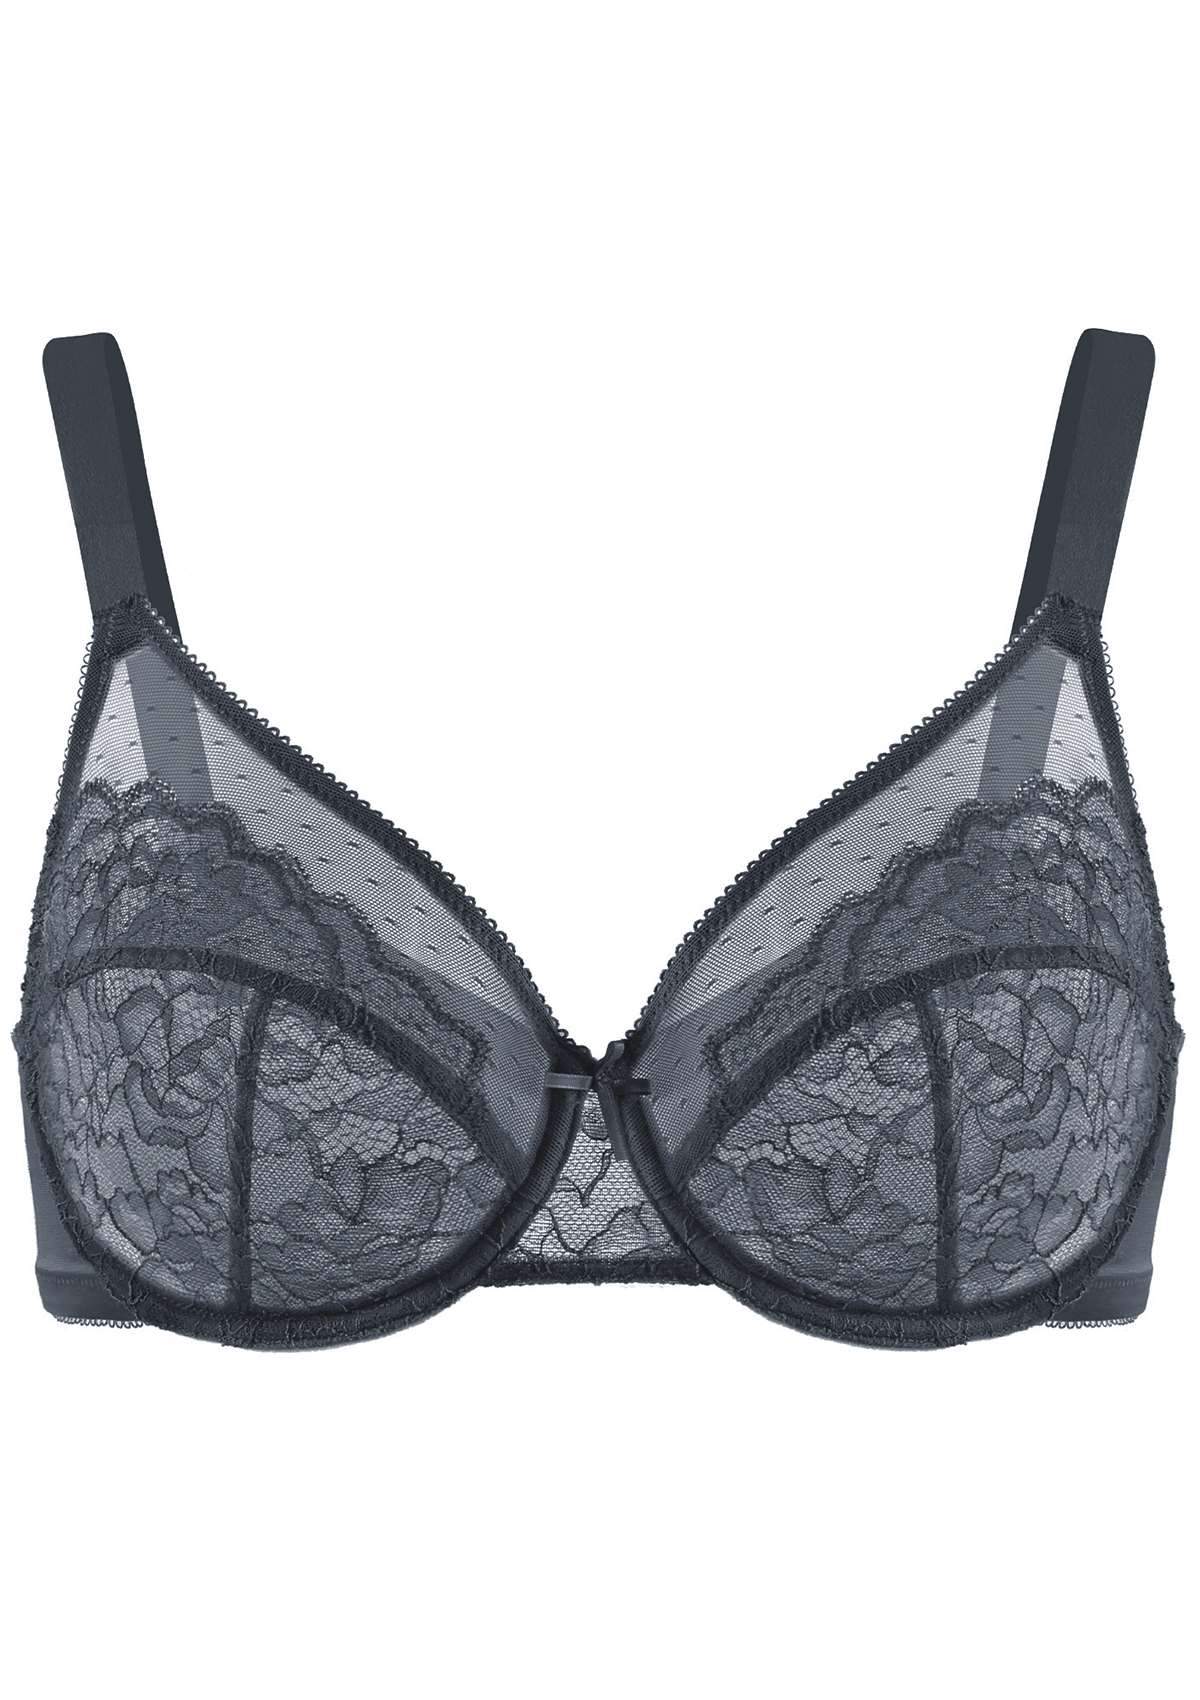 HSIA Enchante Matching Bra And Underwear Sets: Uplift Big Boobs Bra - Dark Gray / 38 / DD/E